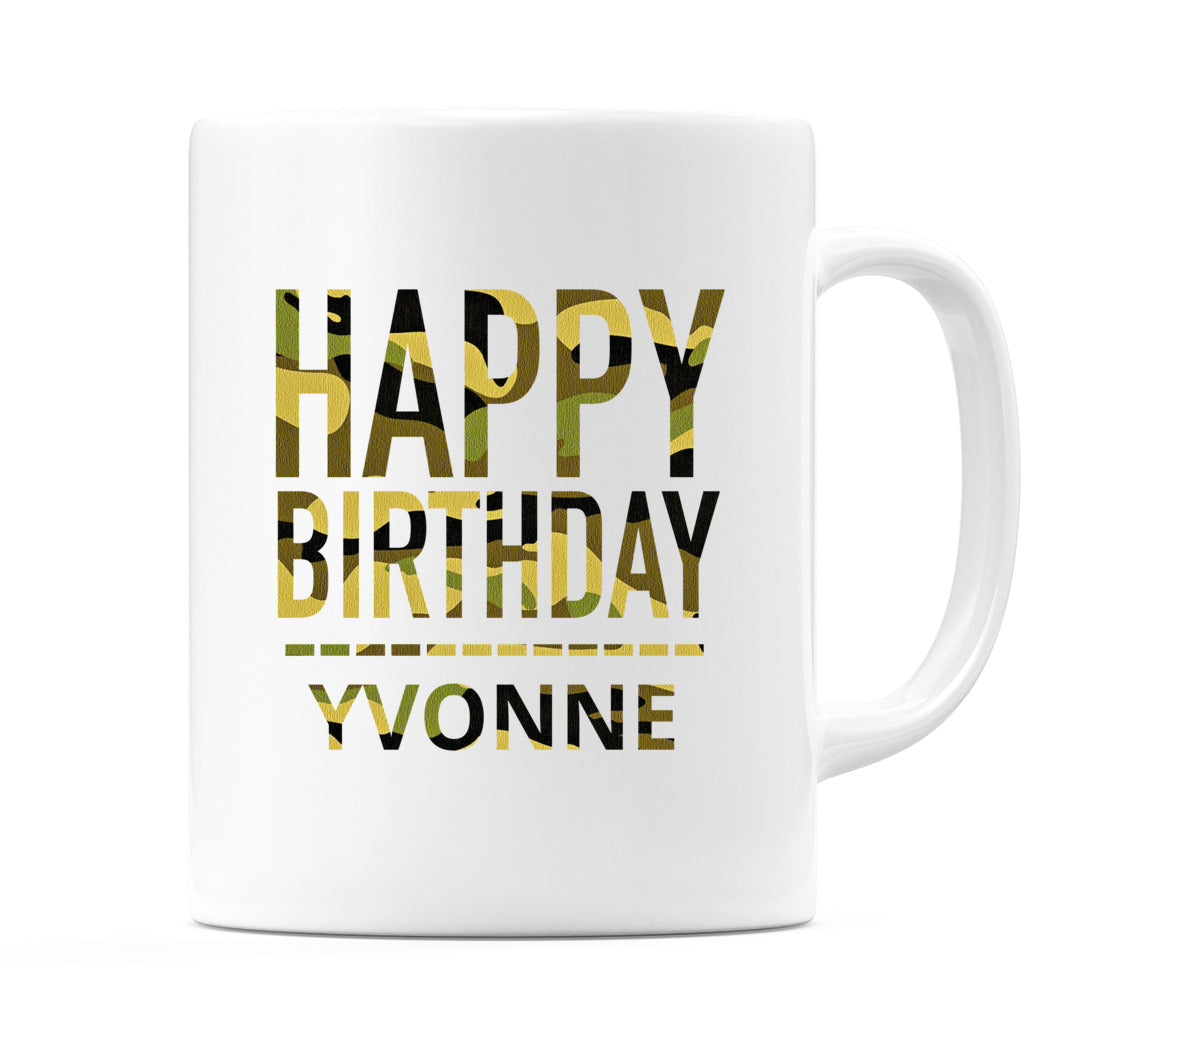 Happy Birthday Yvonne (Camo) Mug Cup by WeDoMugs